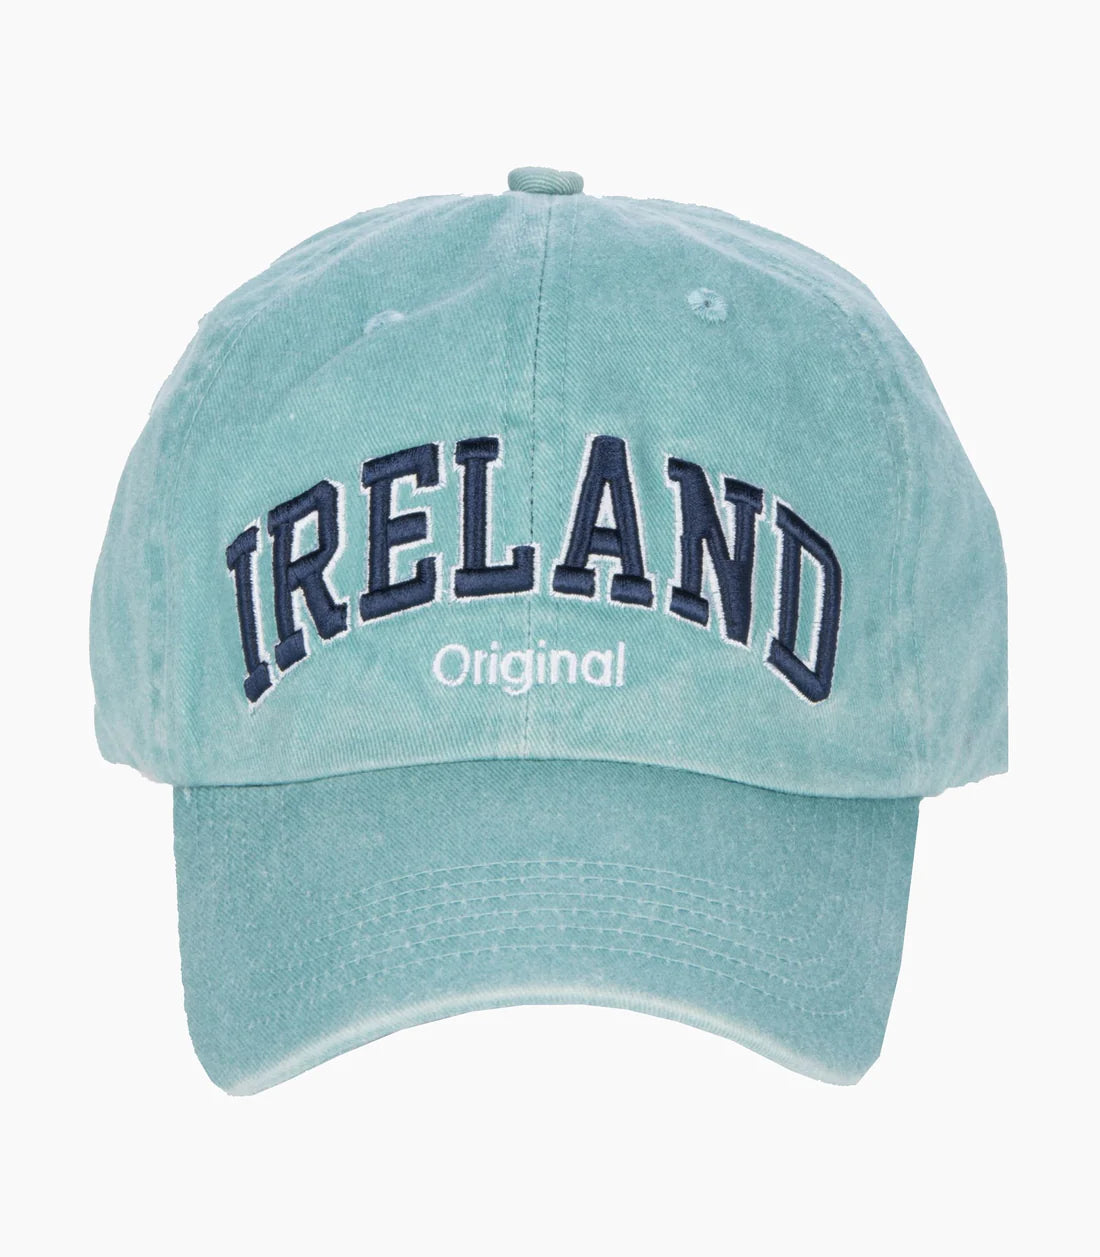 Ireland Original Baseball Cap (Turquoise) - Zhivago Gifts